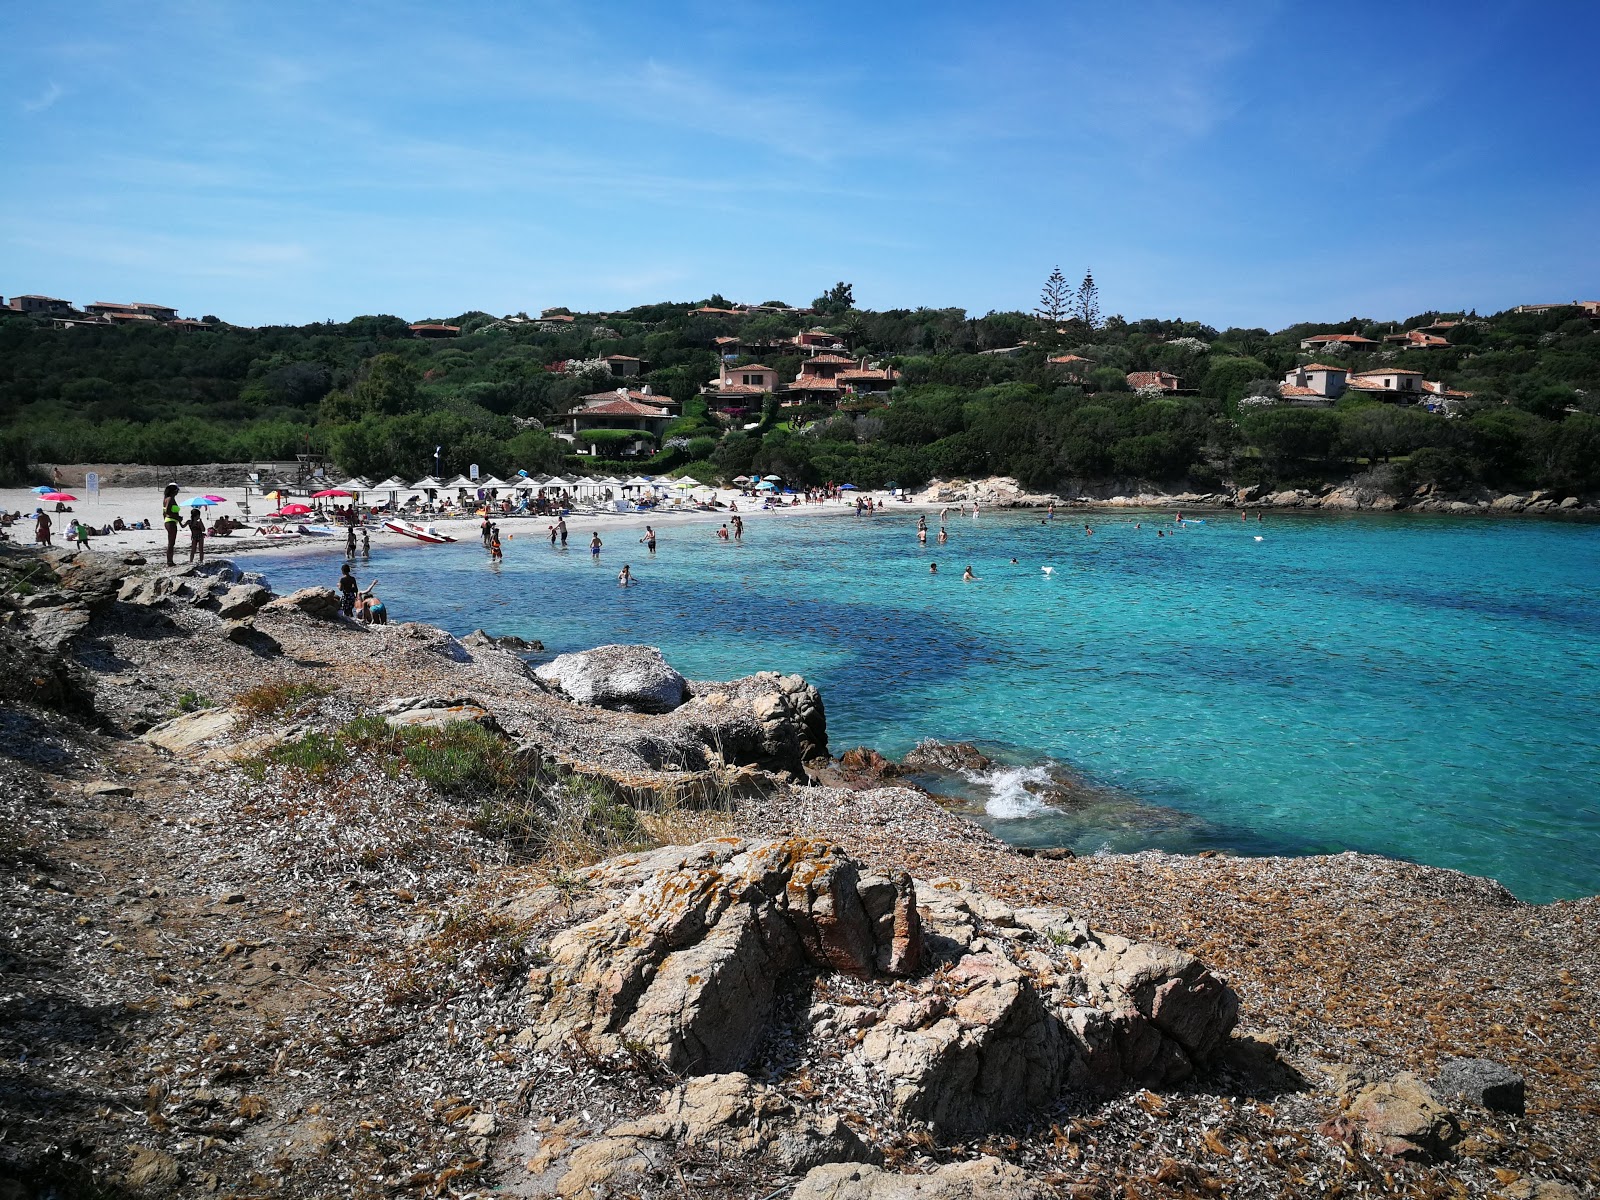 Photo of Spiaggia Cala Granu and its beautiful scenery